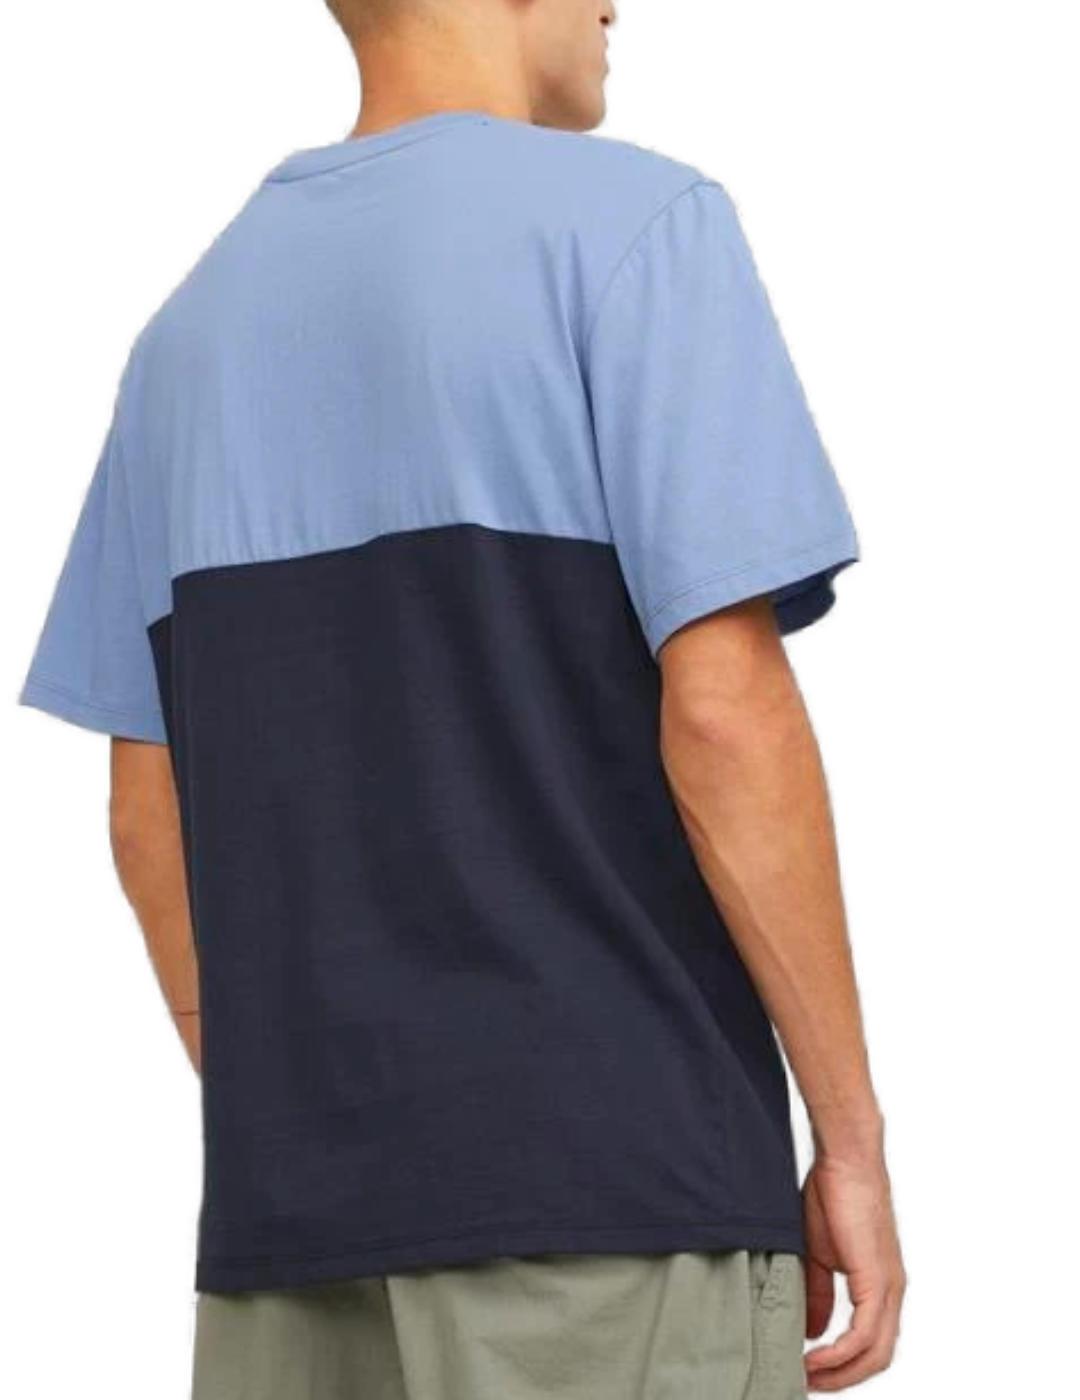 Camiseta Jack&Jones Ryder azul de manga corta para hombre